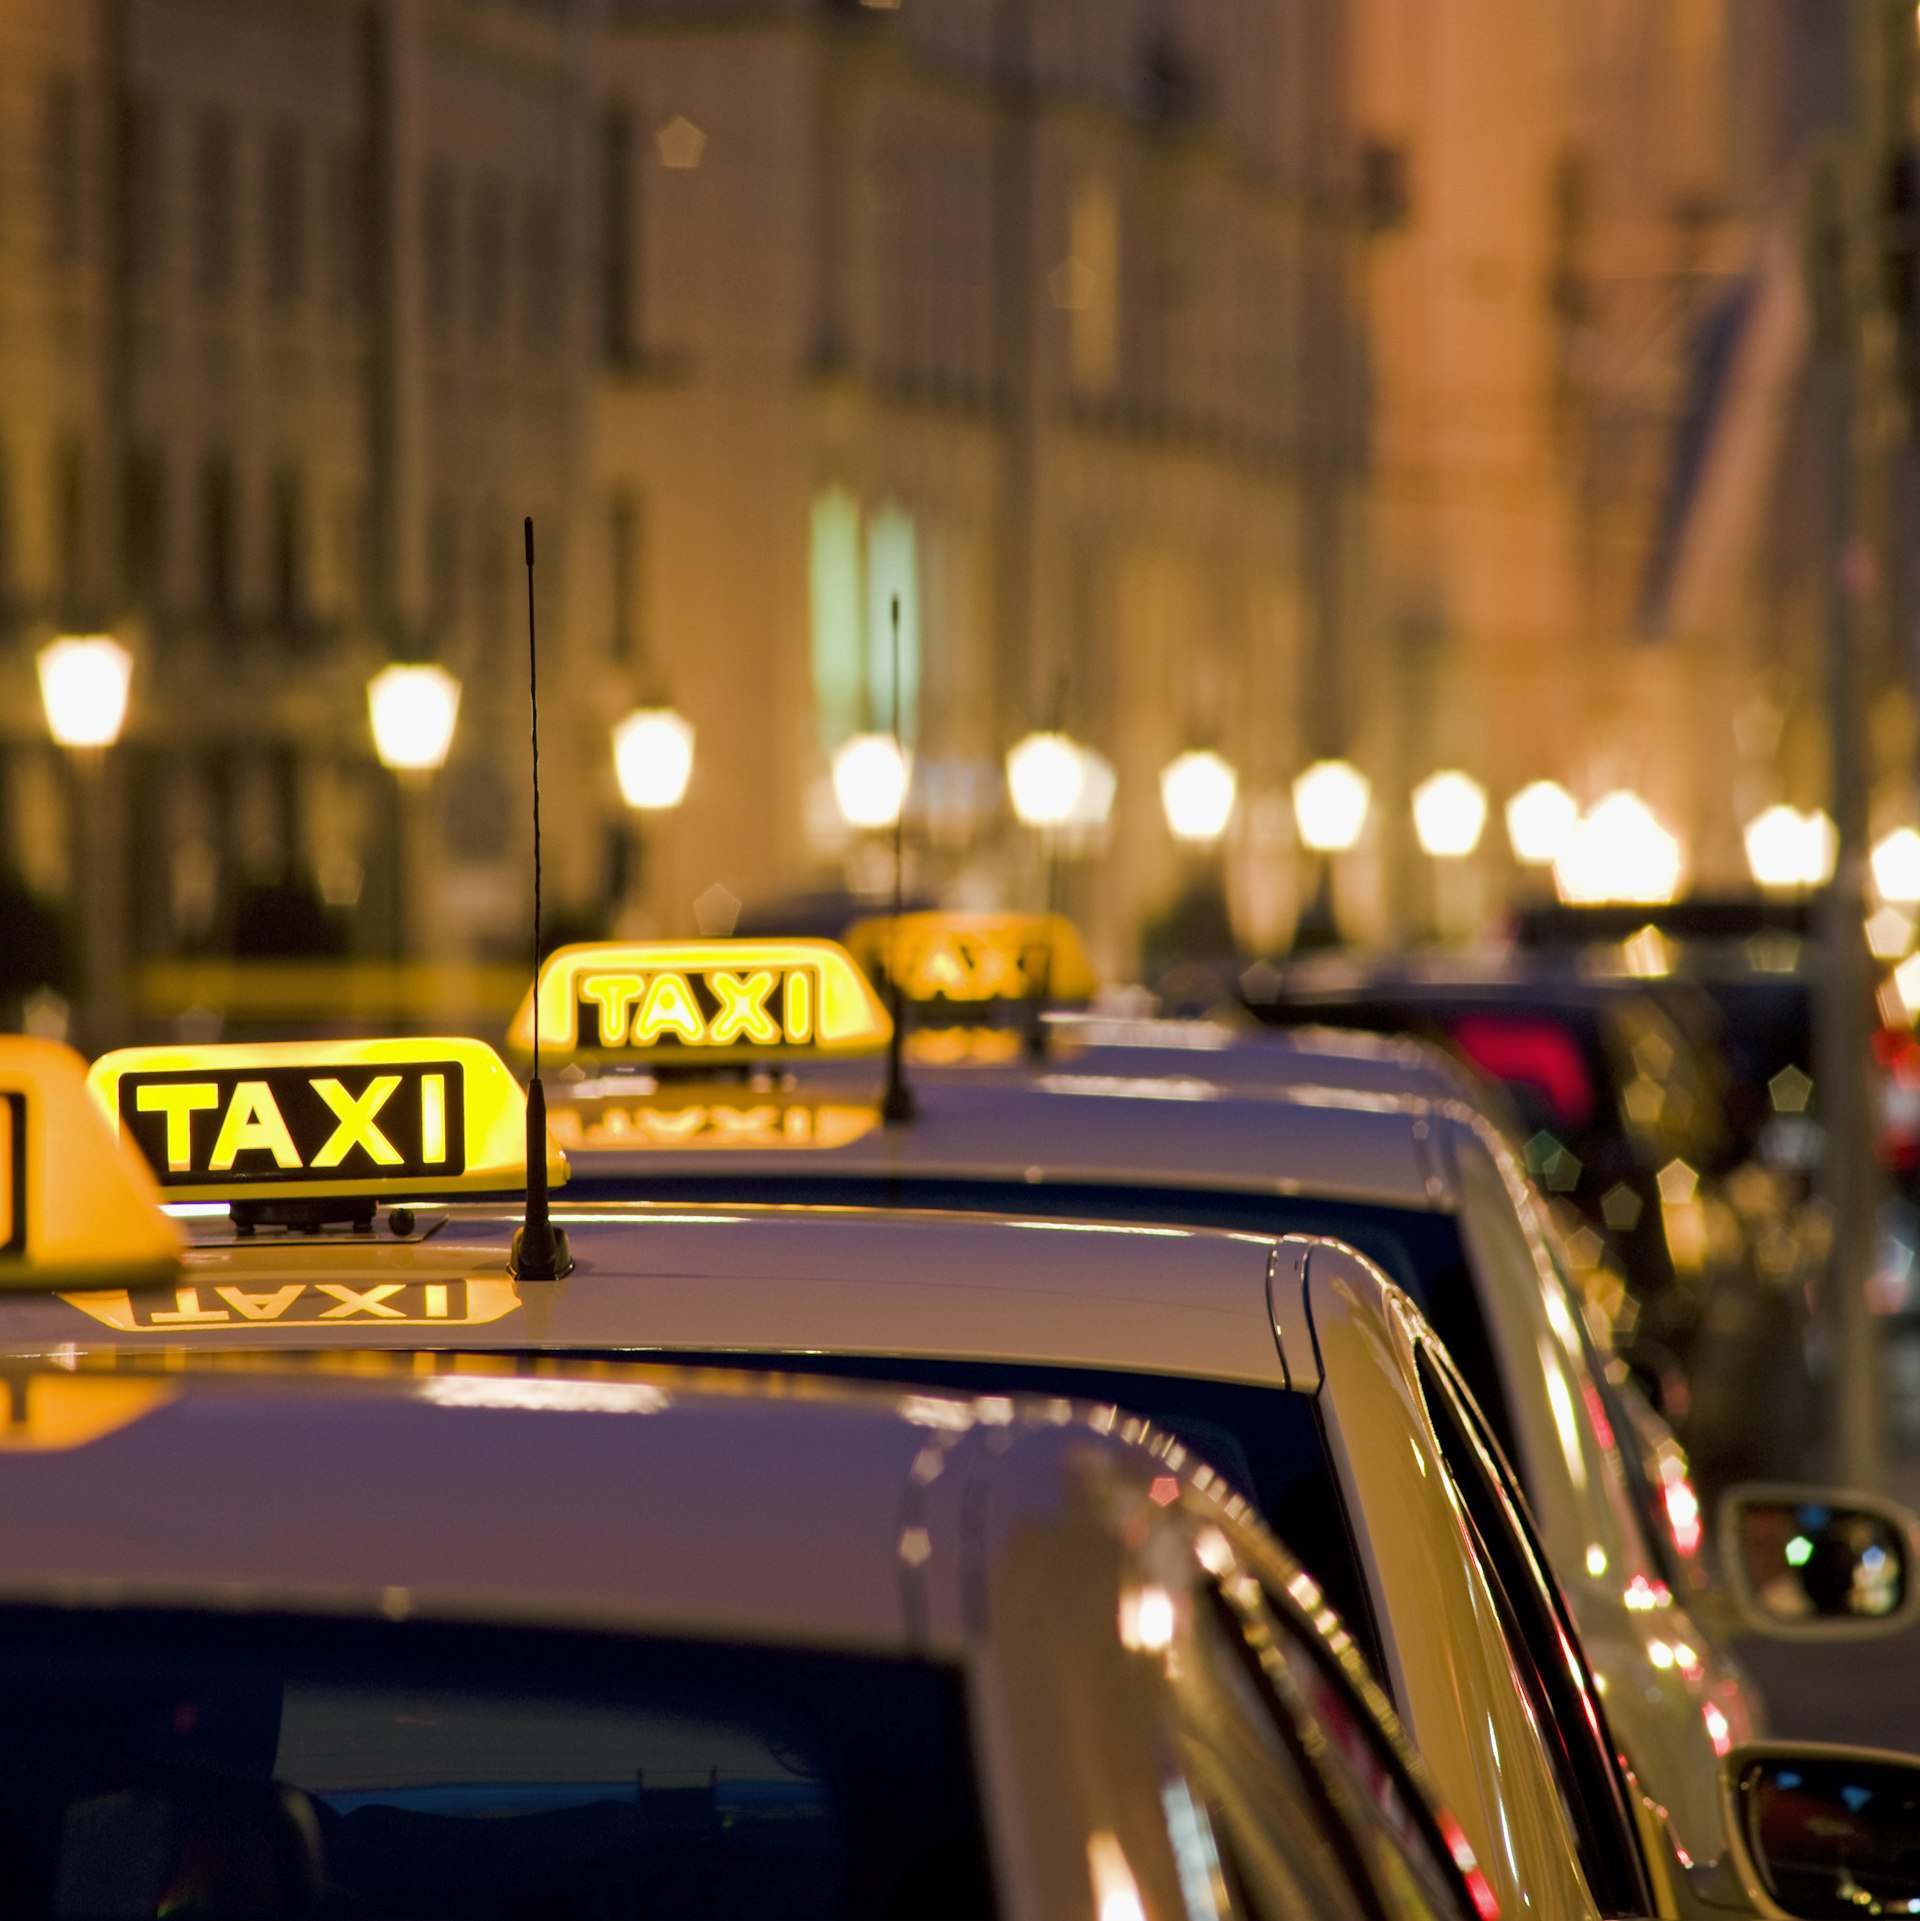 Illuminated taxi signs on Maximilian Street in Munich, Germany